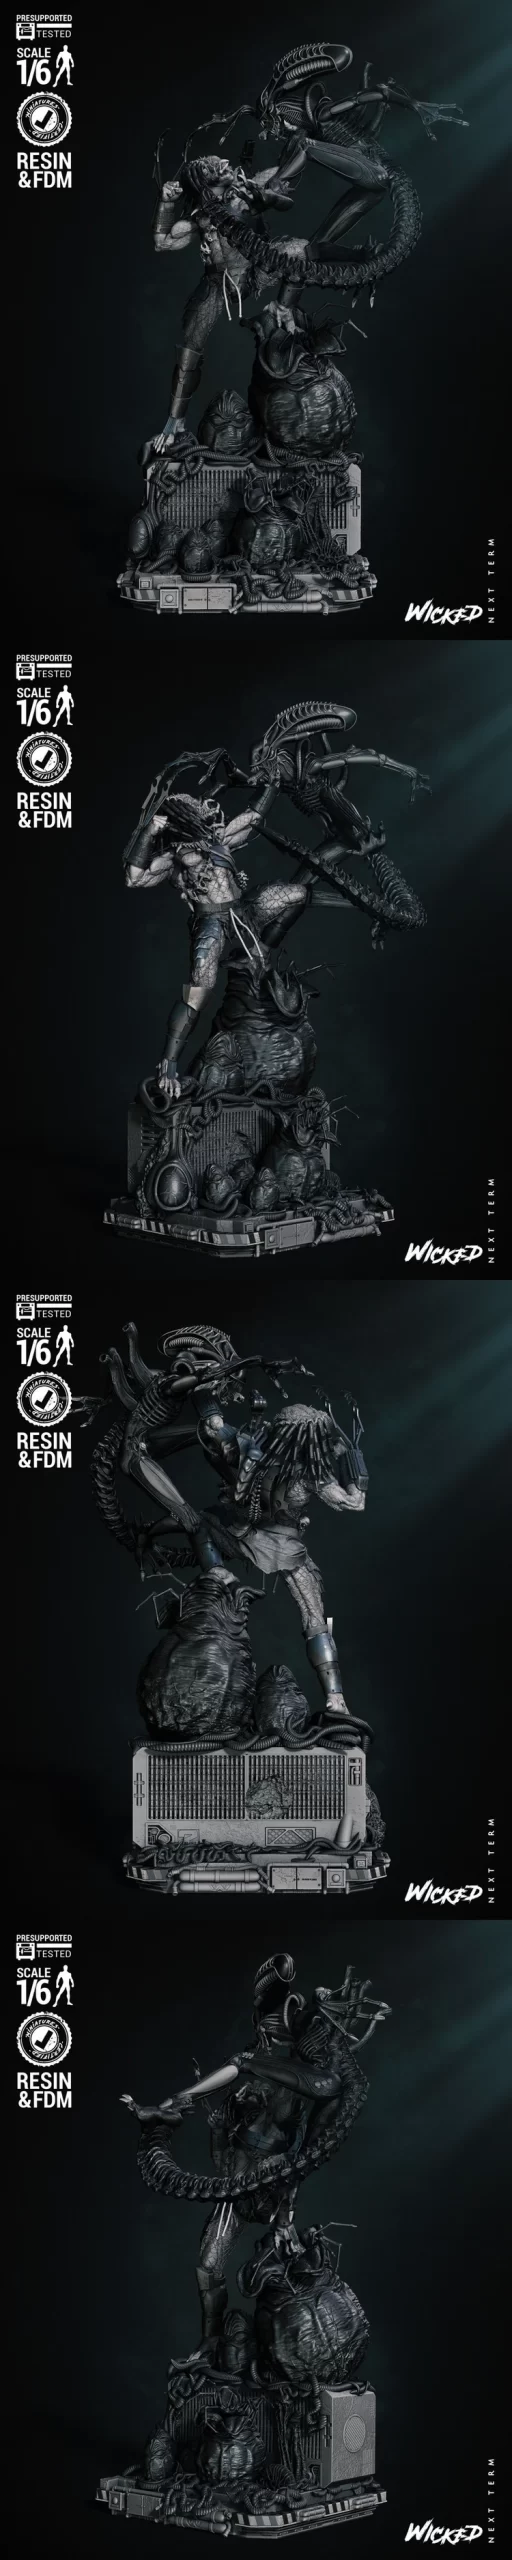 Predator and Alien Diorama